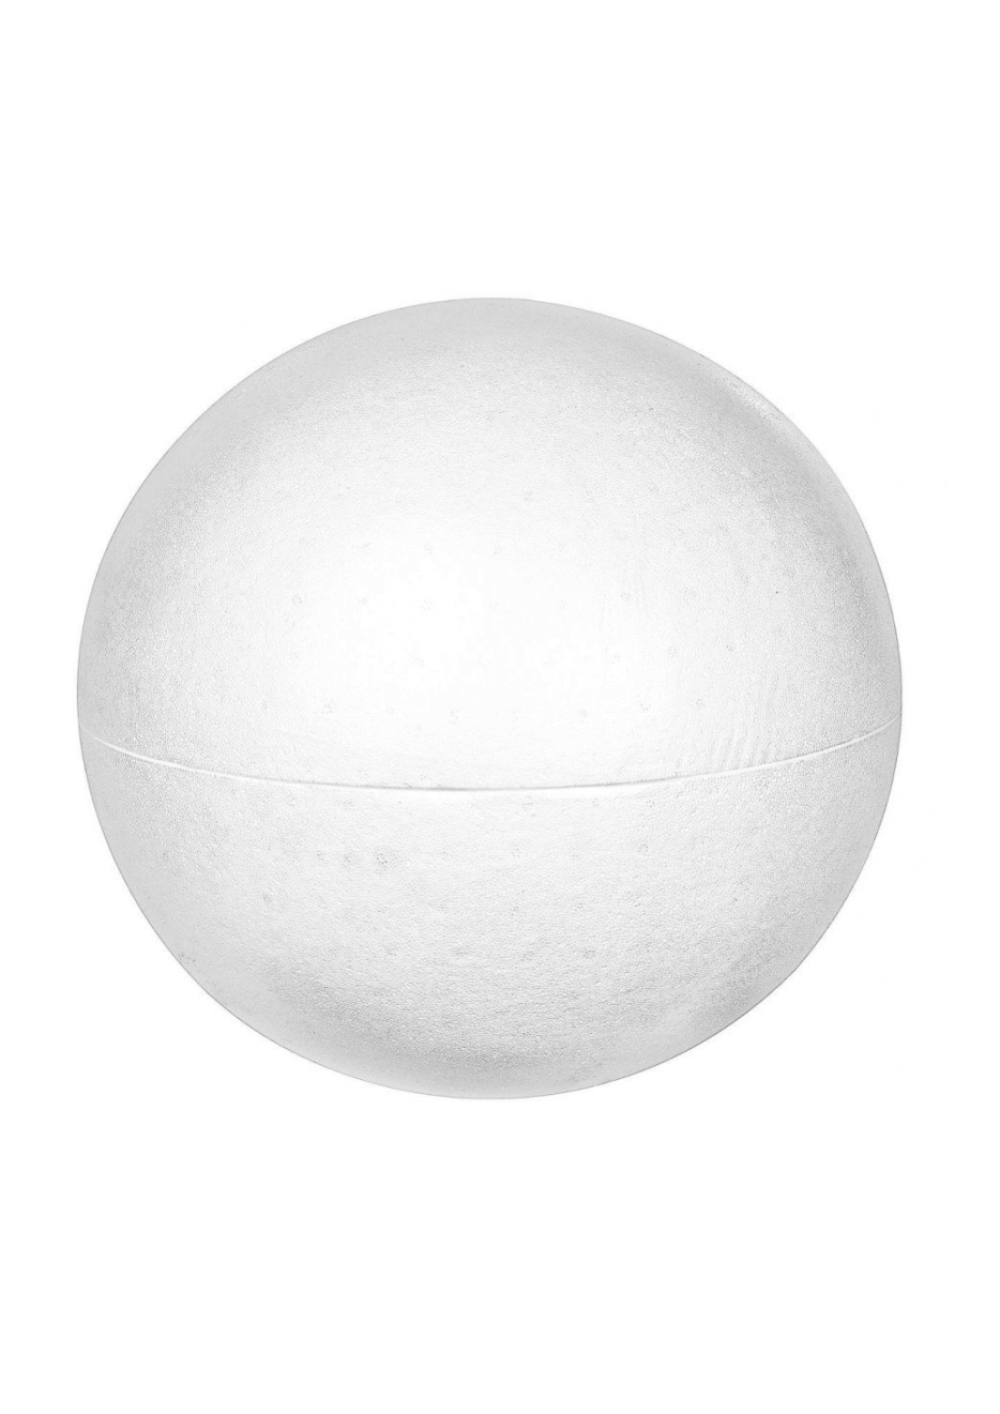 Petites boules polystyrène - 60 pièces - Boules en polystyrène - 10 Doigts